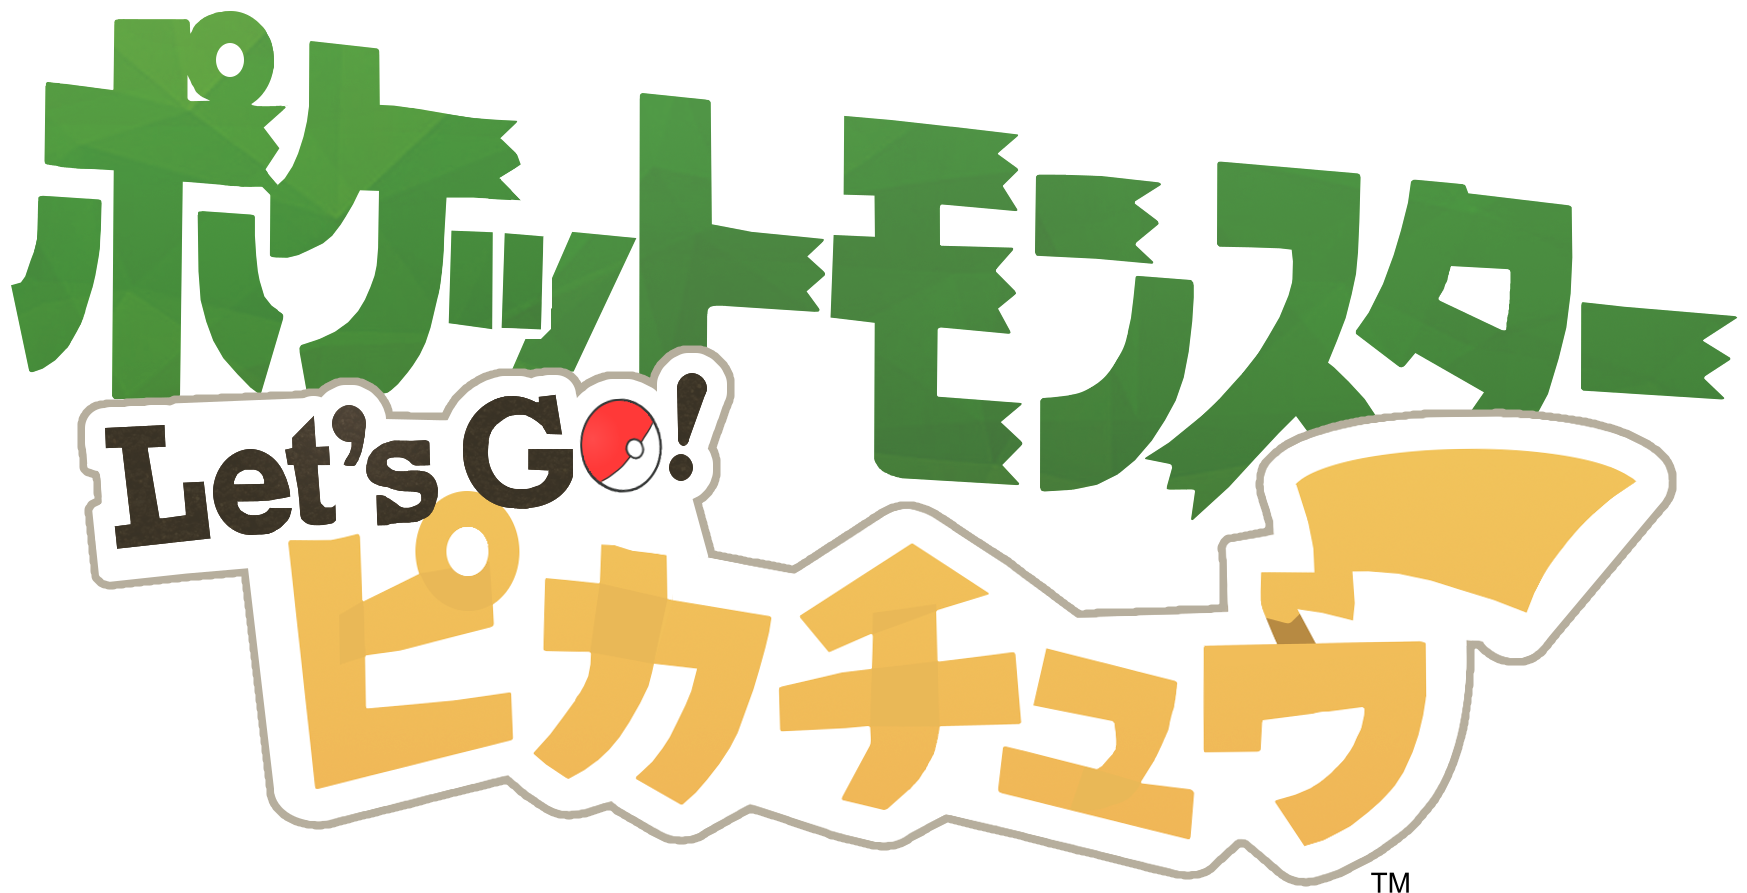 Imagehigher Resolution Of The [pokémon Let's Go Pikachu] - Let's Go Pikachu Japanese Logo (1920x1920), Png Download